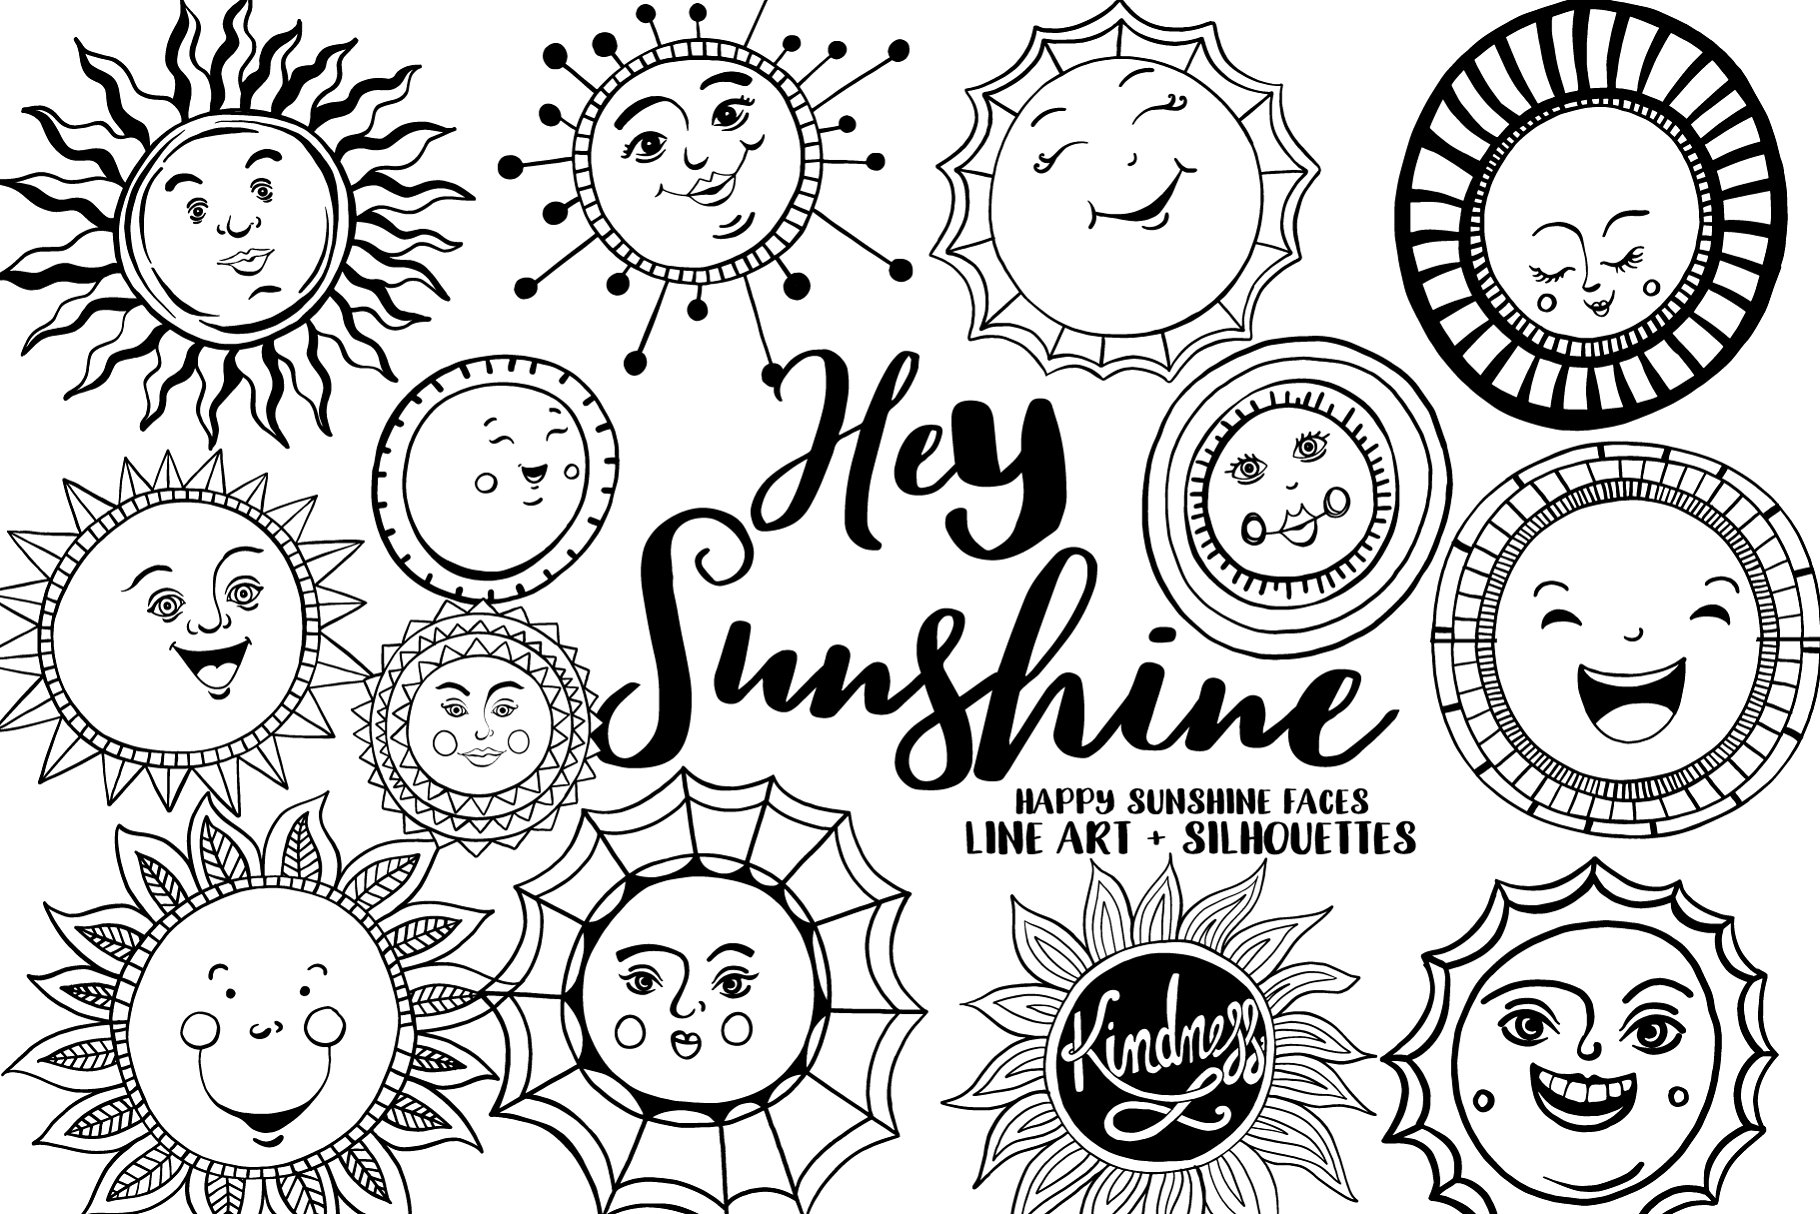 夏季太阳主题人物笑脸插画 Sunshine Face Illustrations插图(2)